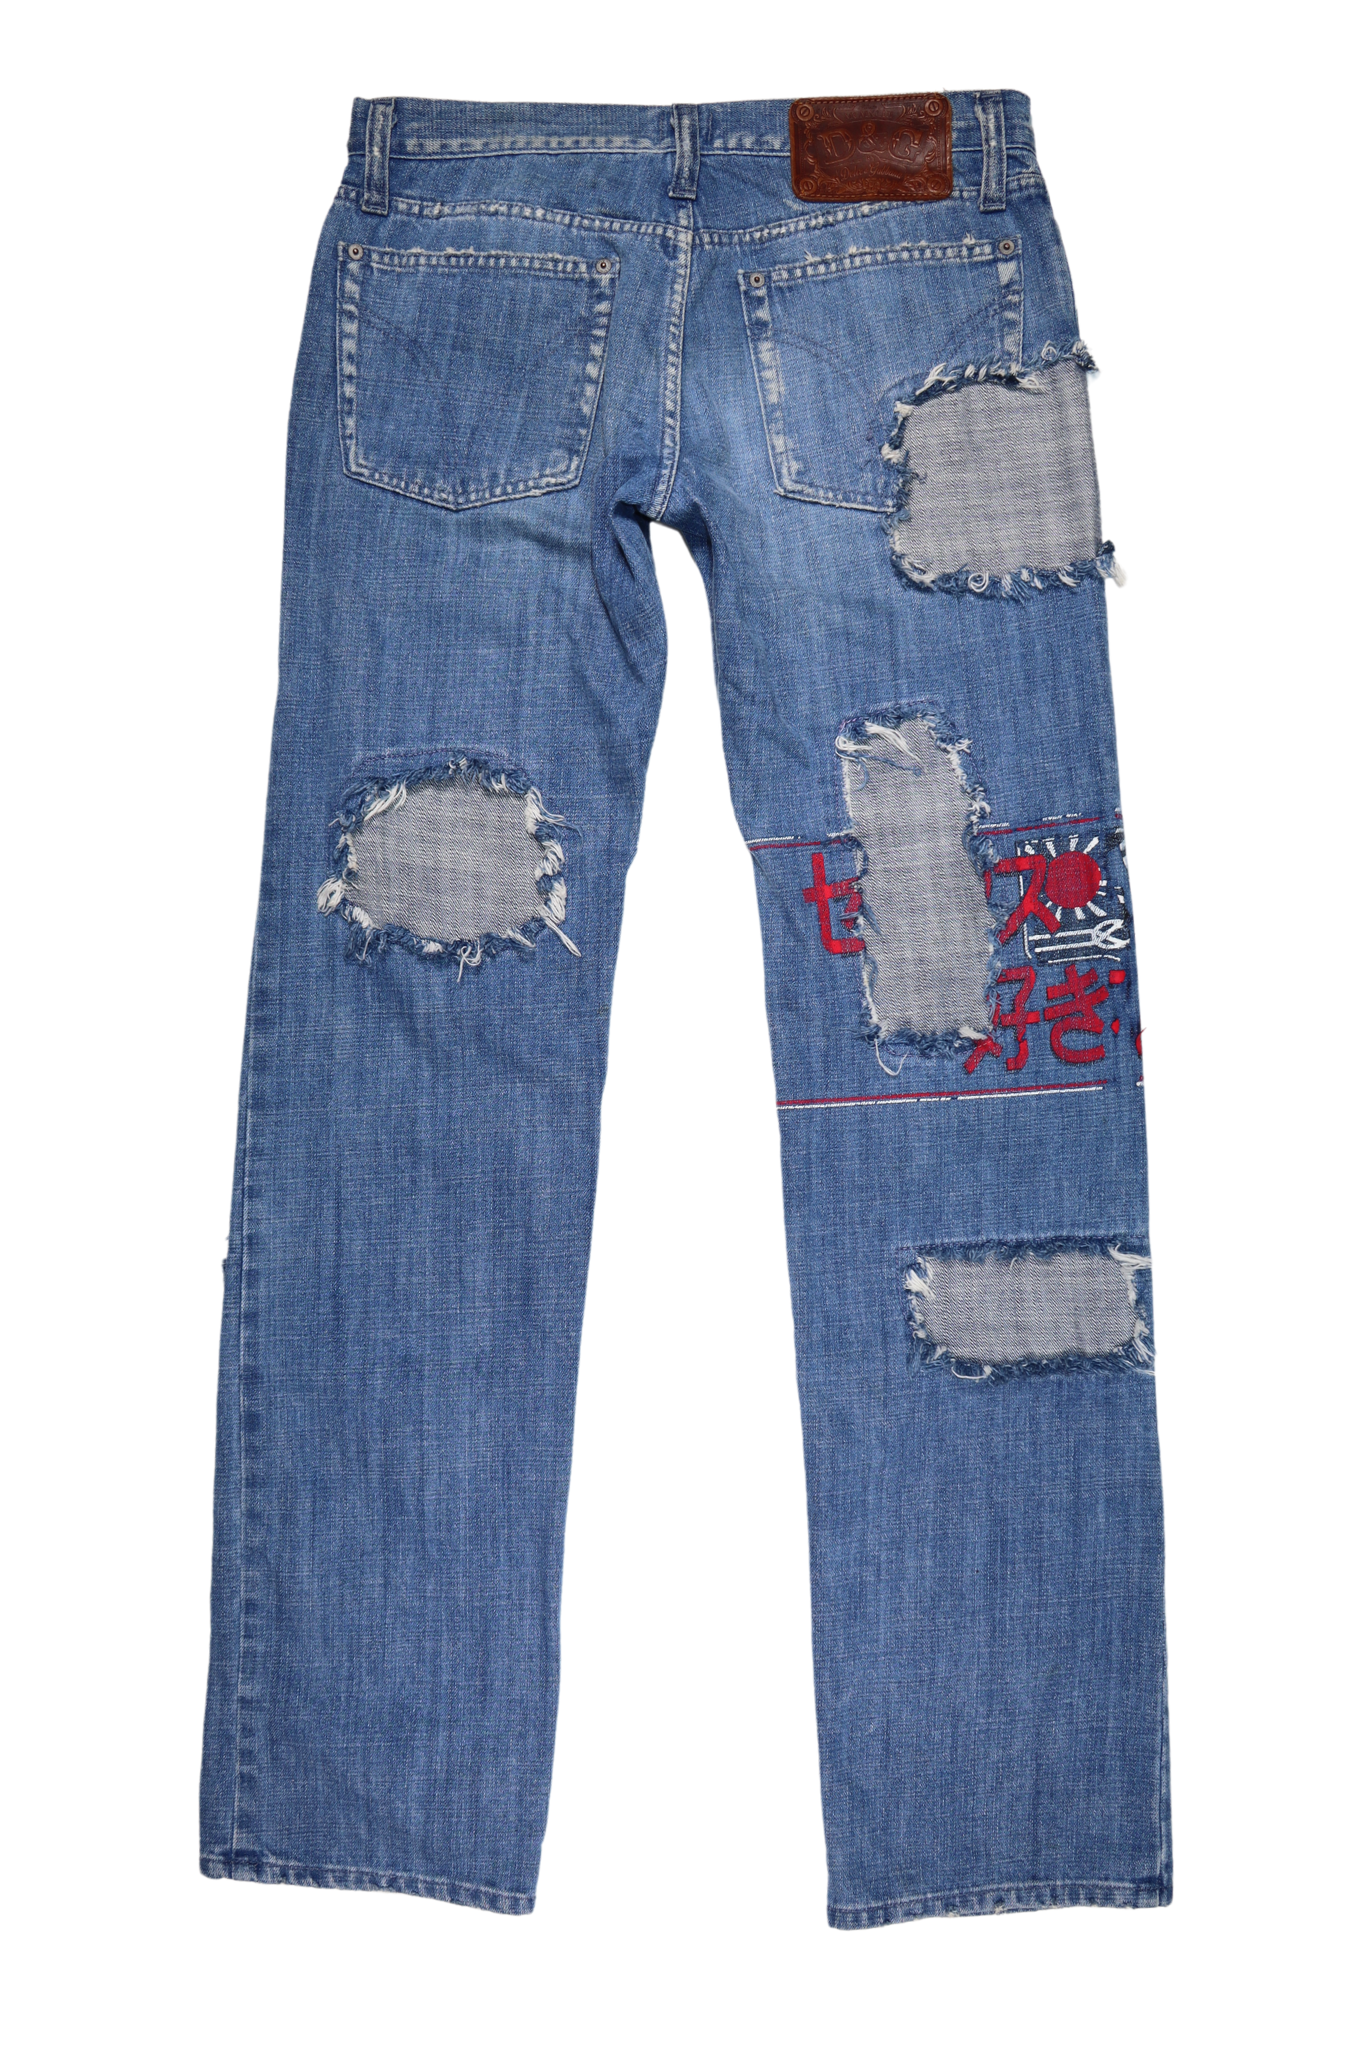 Vintage D&G Hiragana Patchwork Denim Jean